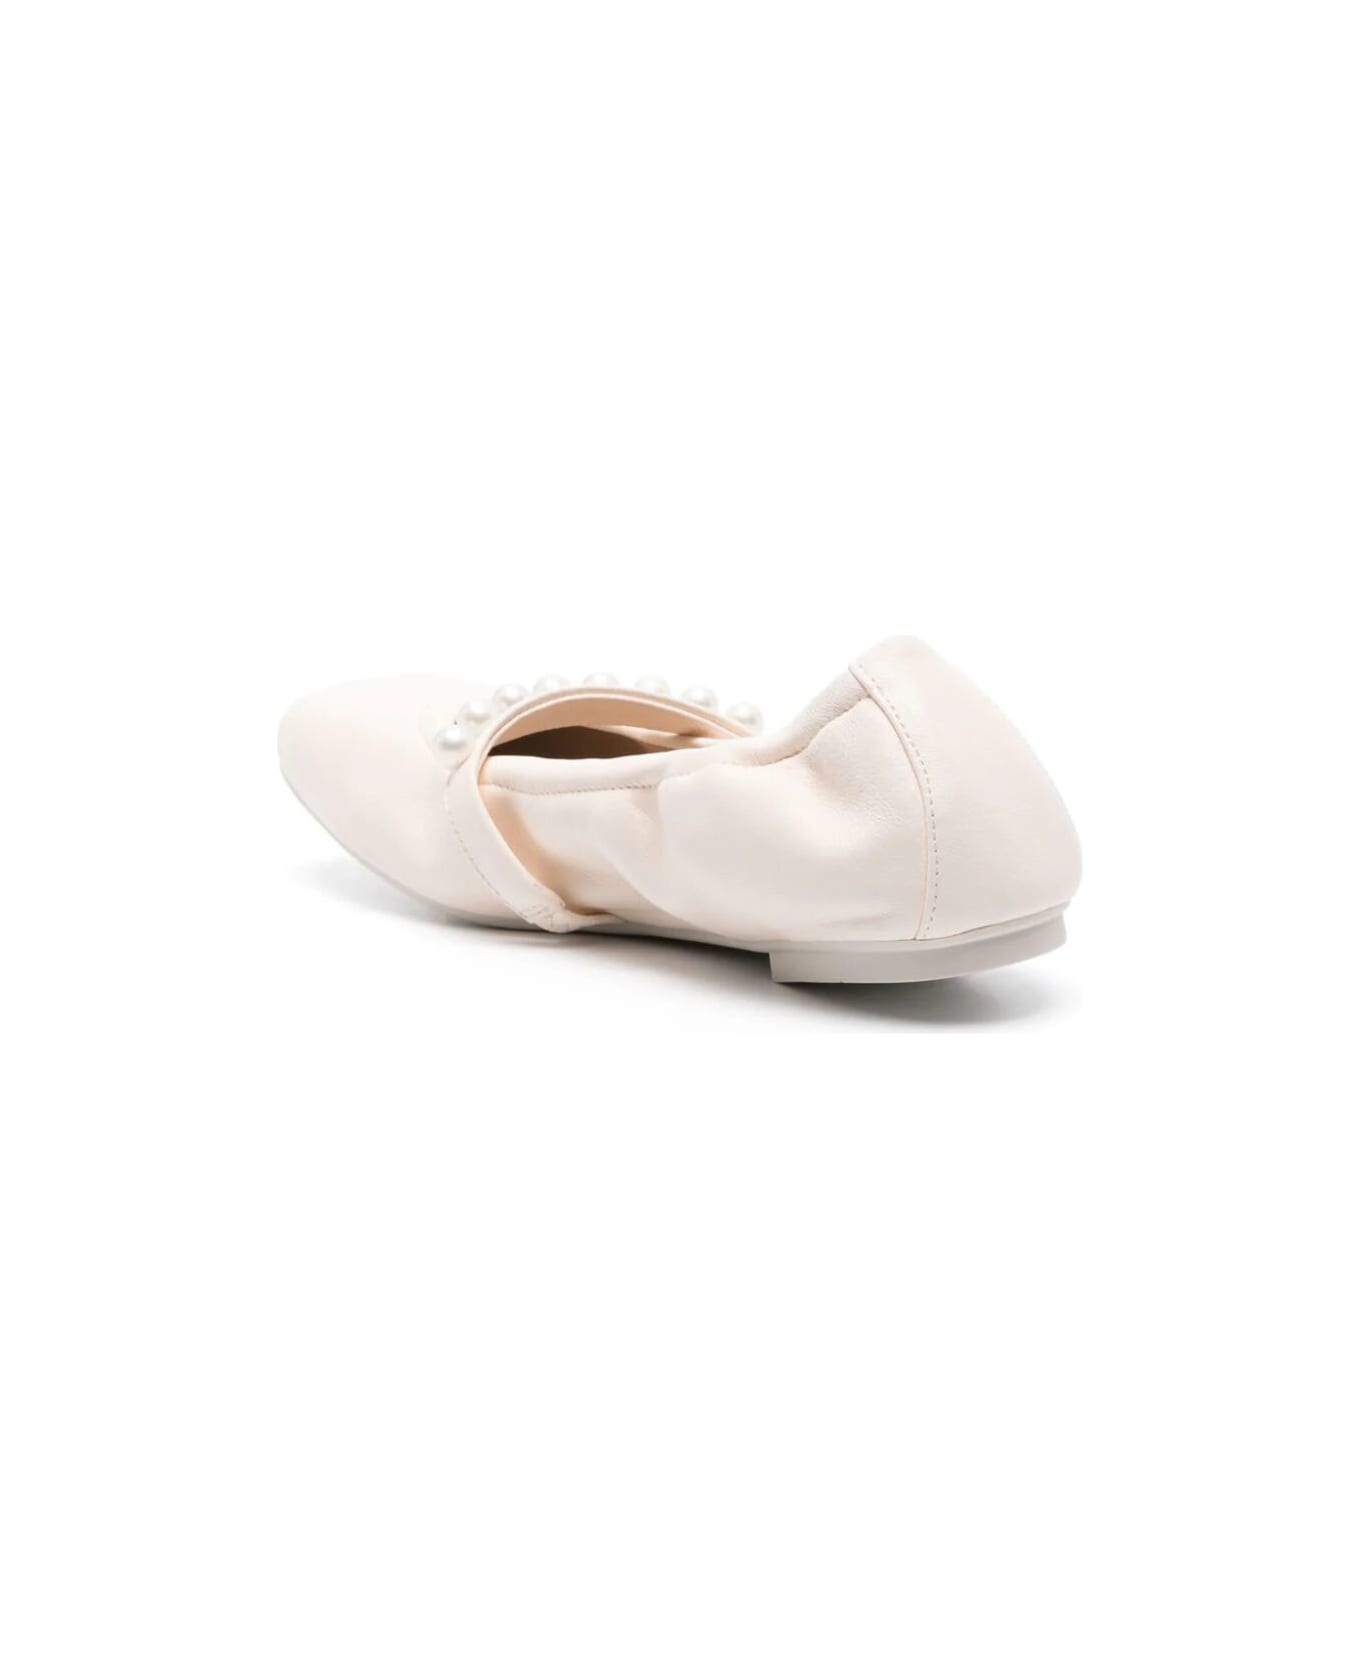 Stuart Weitzman Goldie Ballet Flat - Seashell